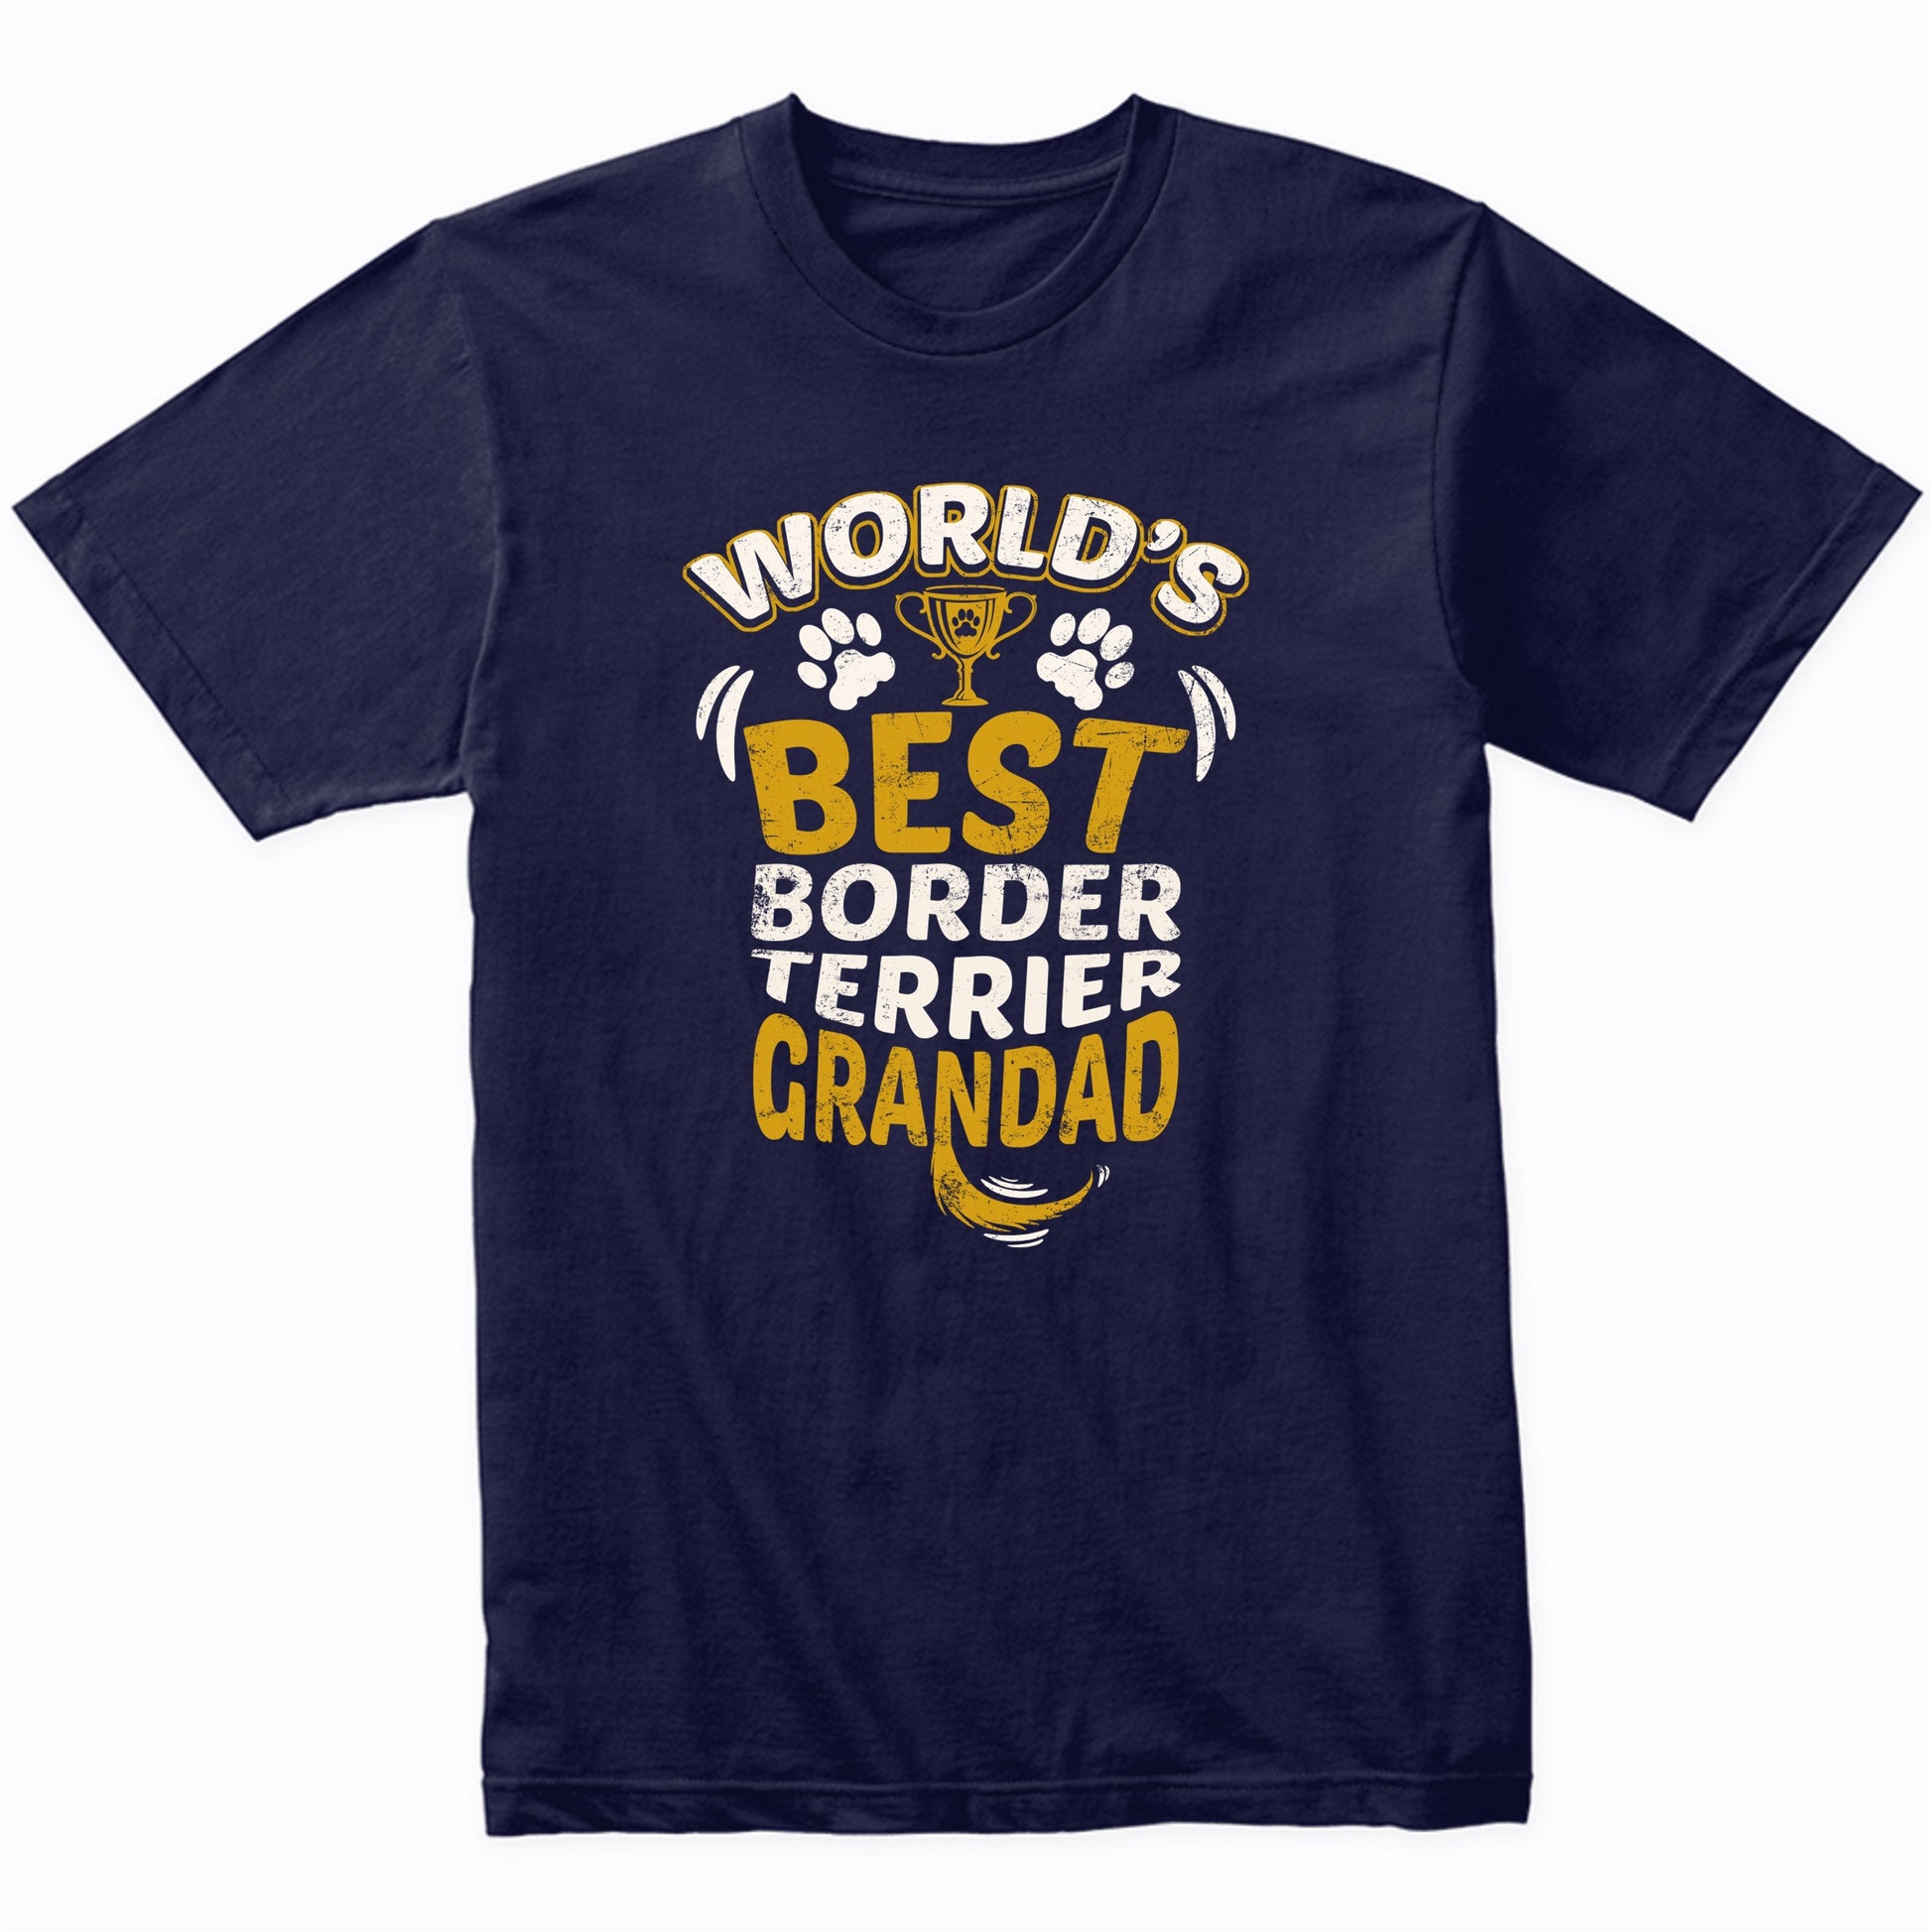 World's Best Border Terrier Grandad Graphic T-Shirt